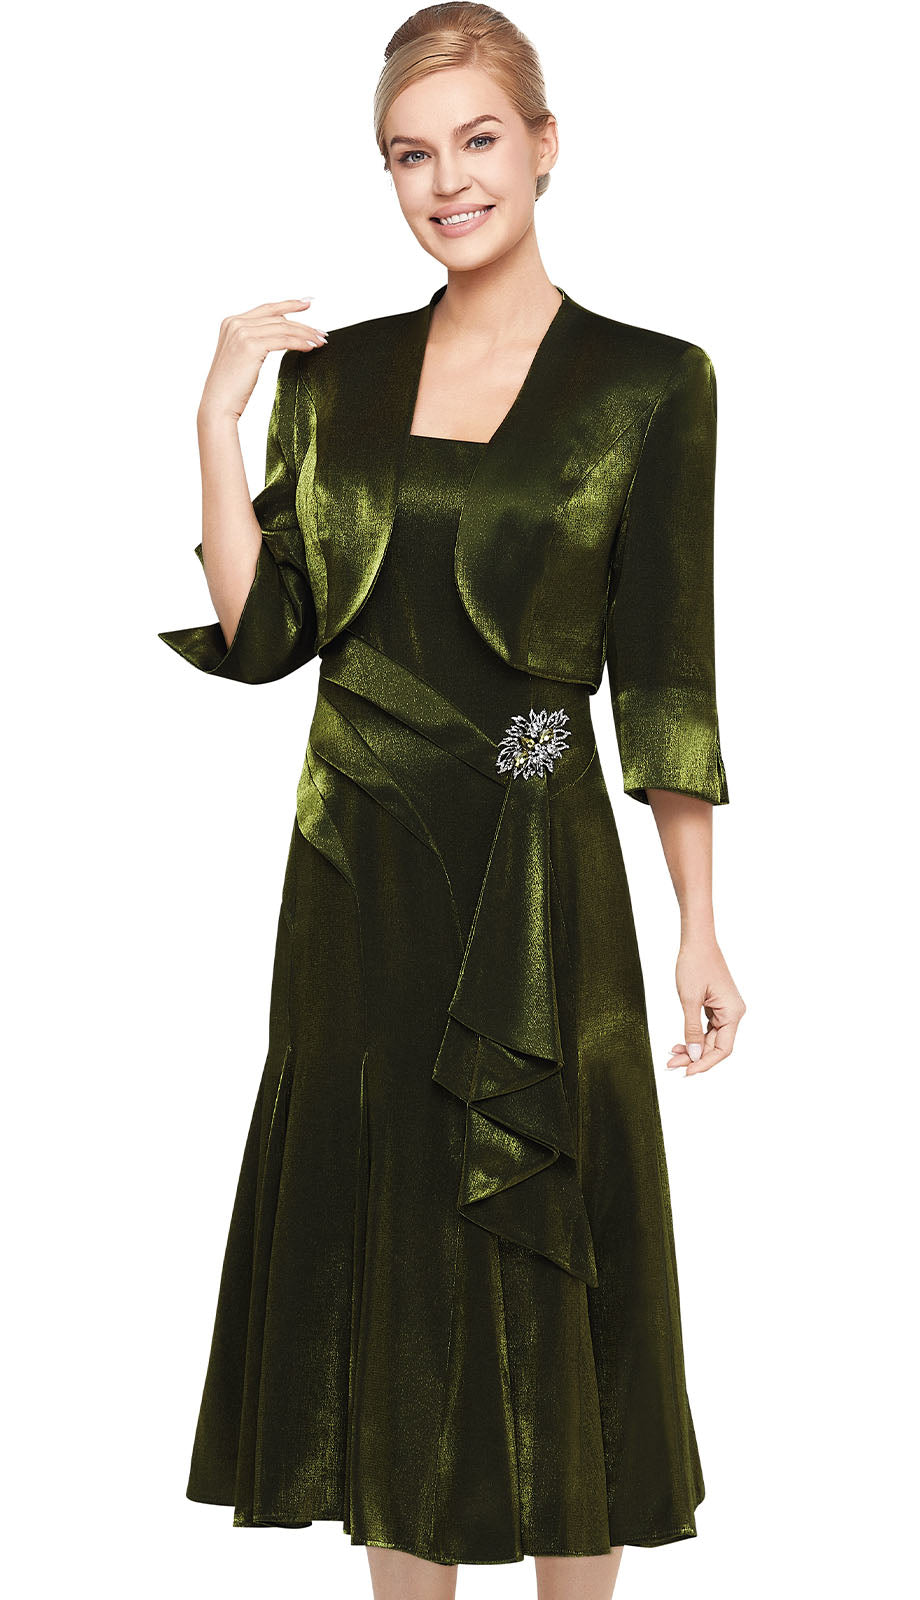 Nina Massini Church Dress 2680-Olive - Church Suits For Less